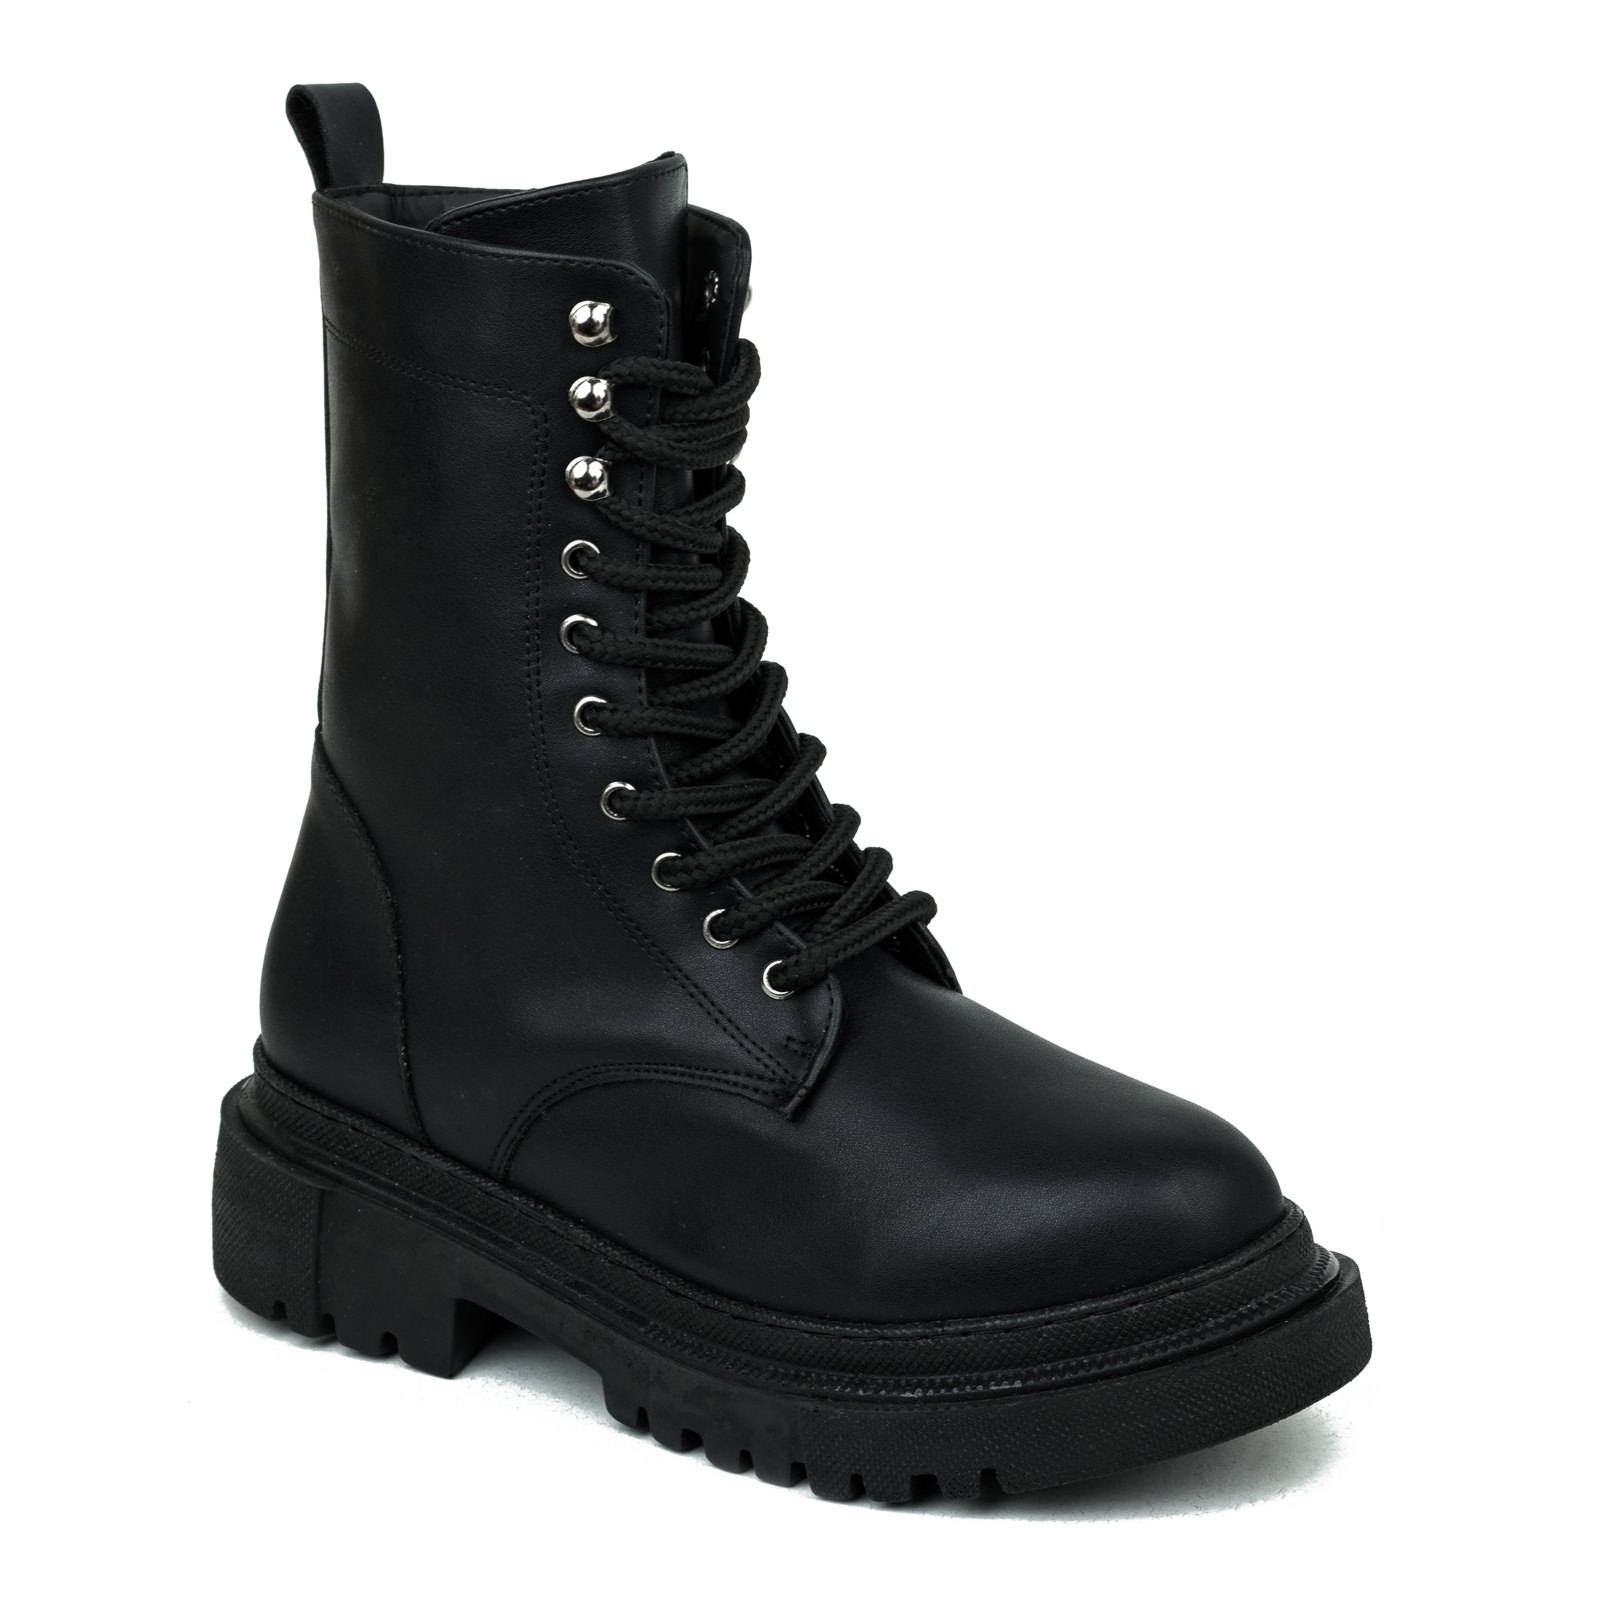 Women ankle boots B196 - BLACK